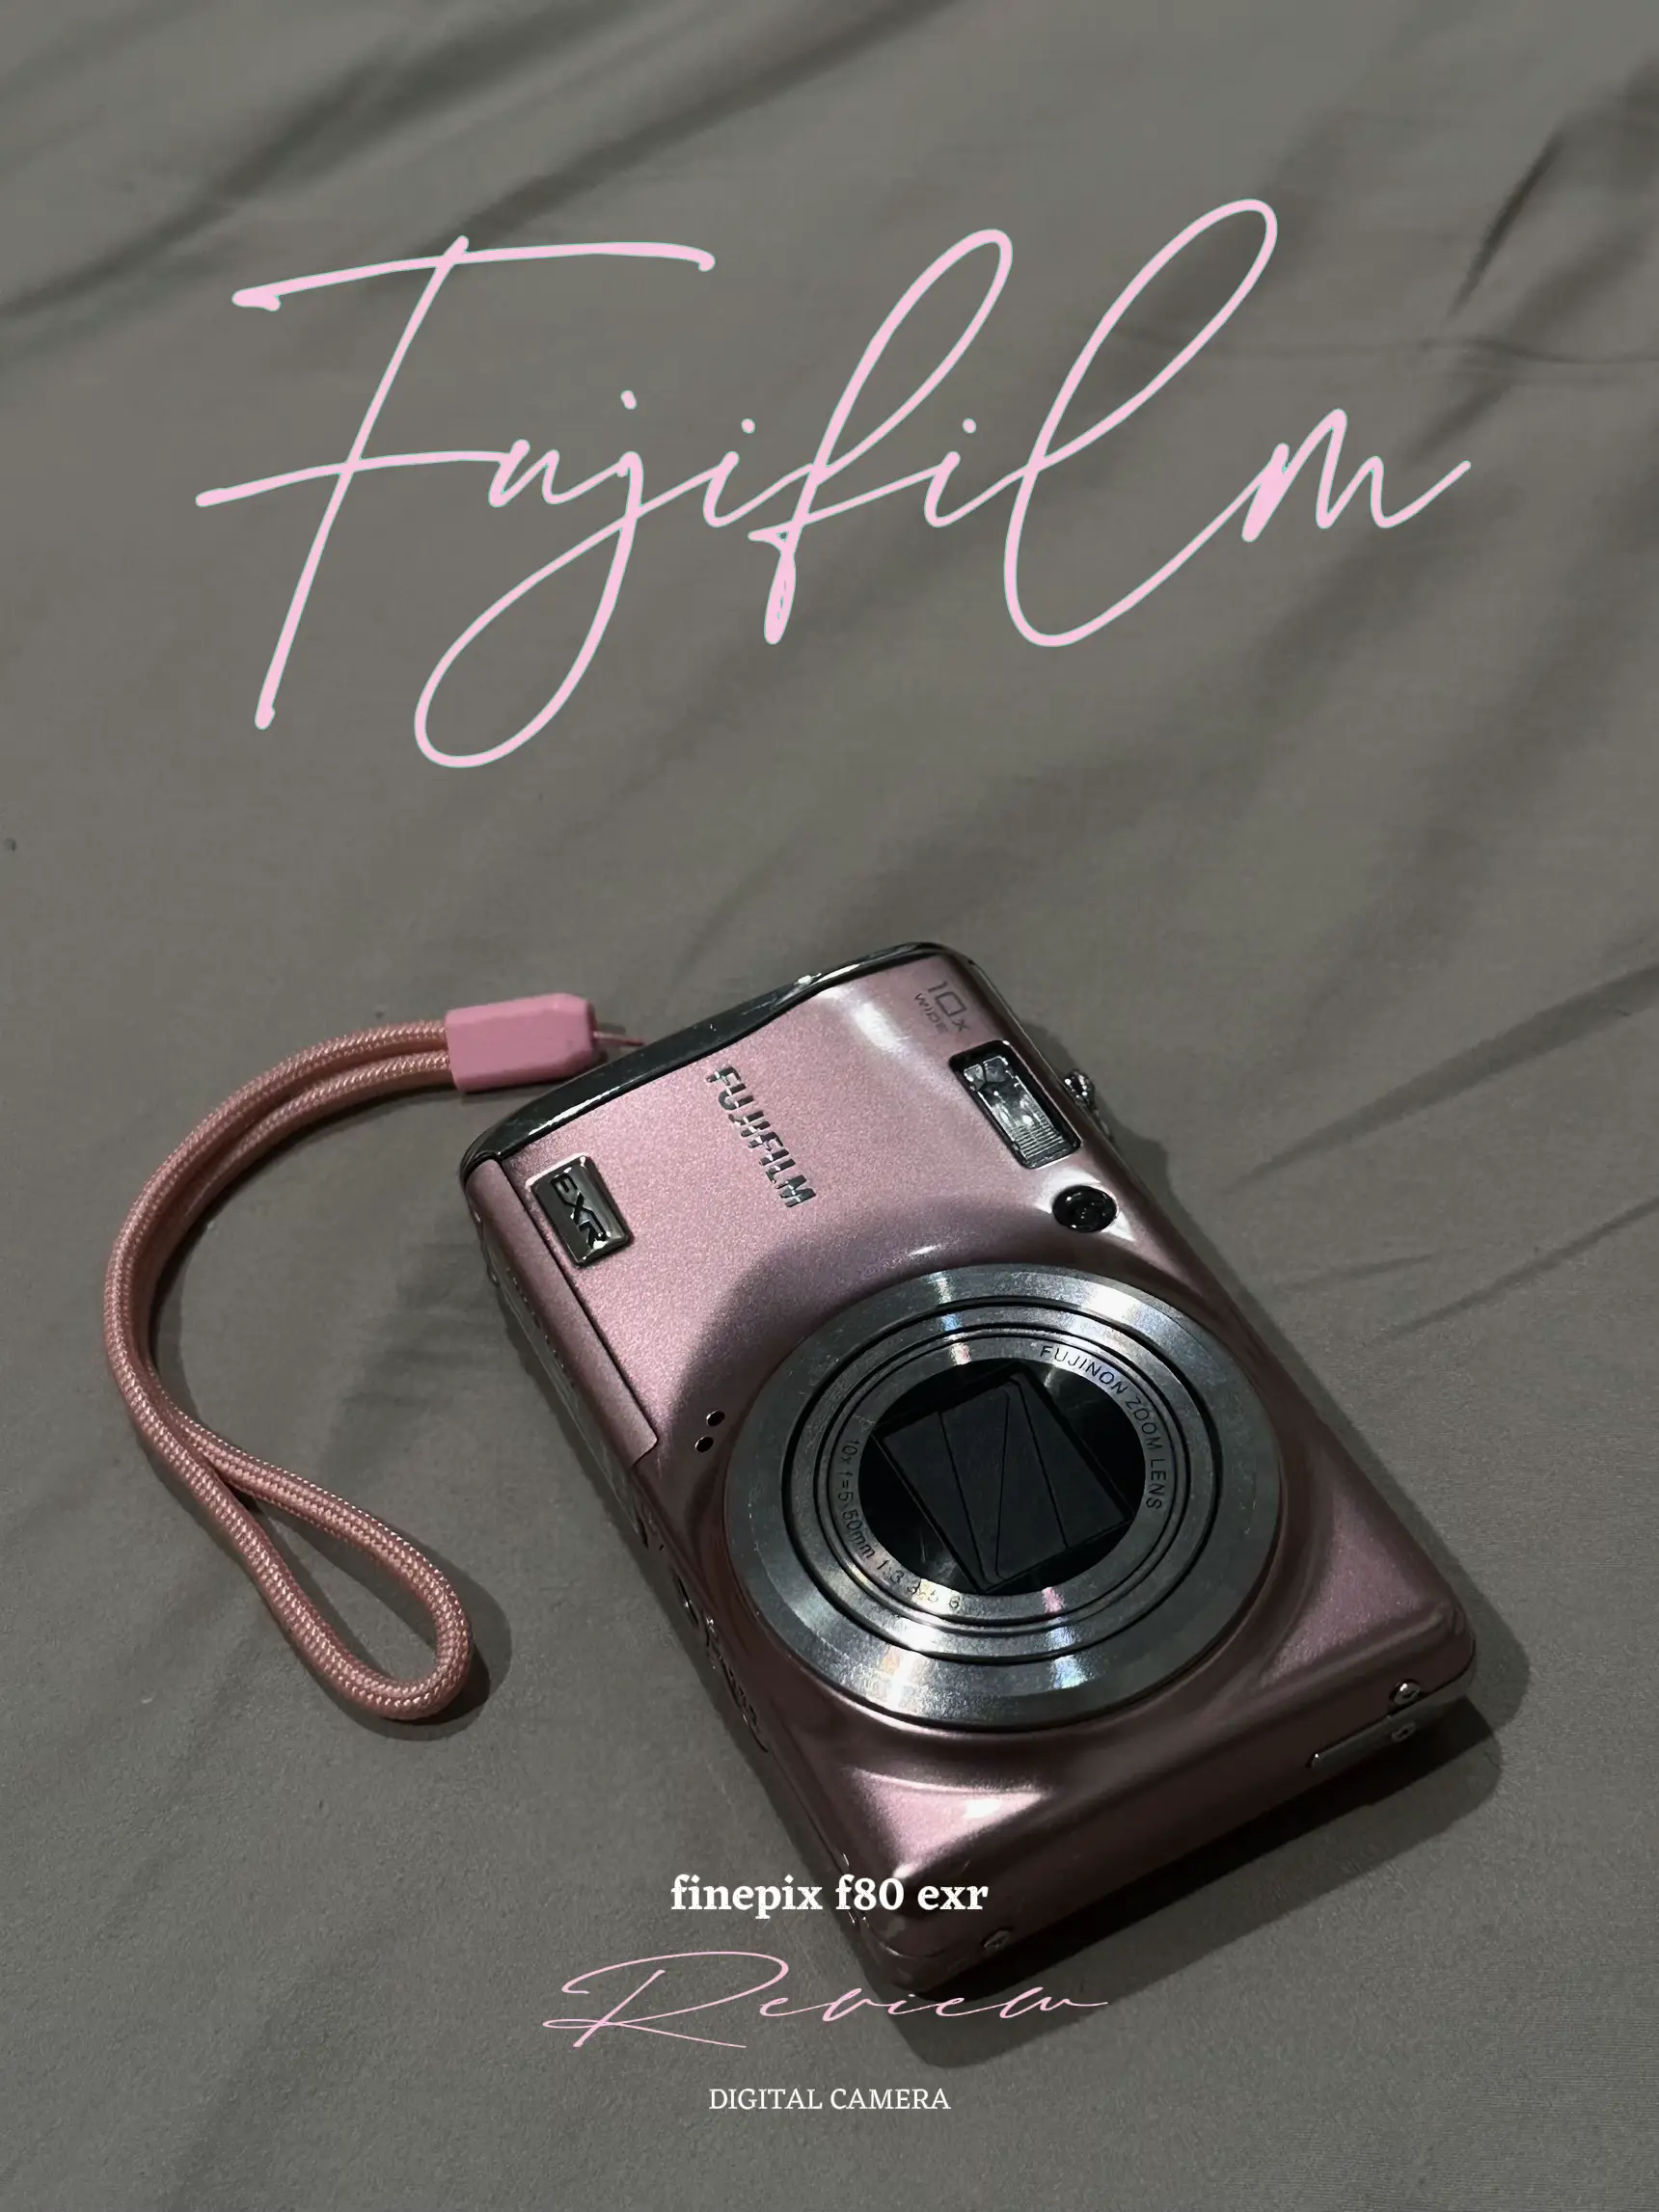 日本正規代理店 FUJIFILM Finepix F80 EXR | flora-schools.com